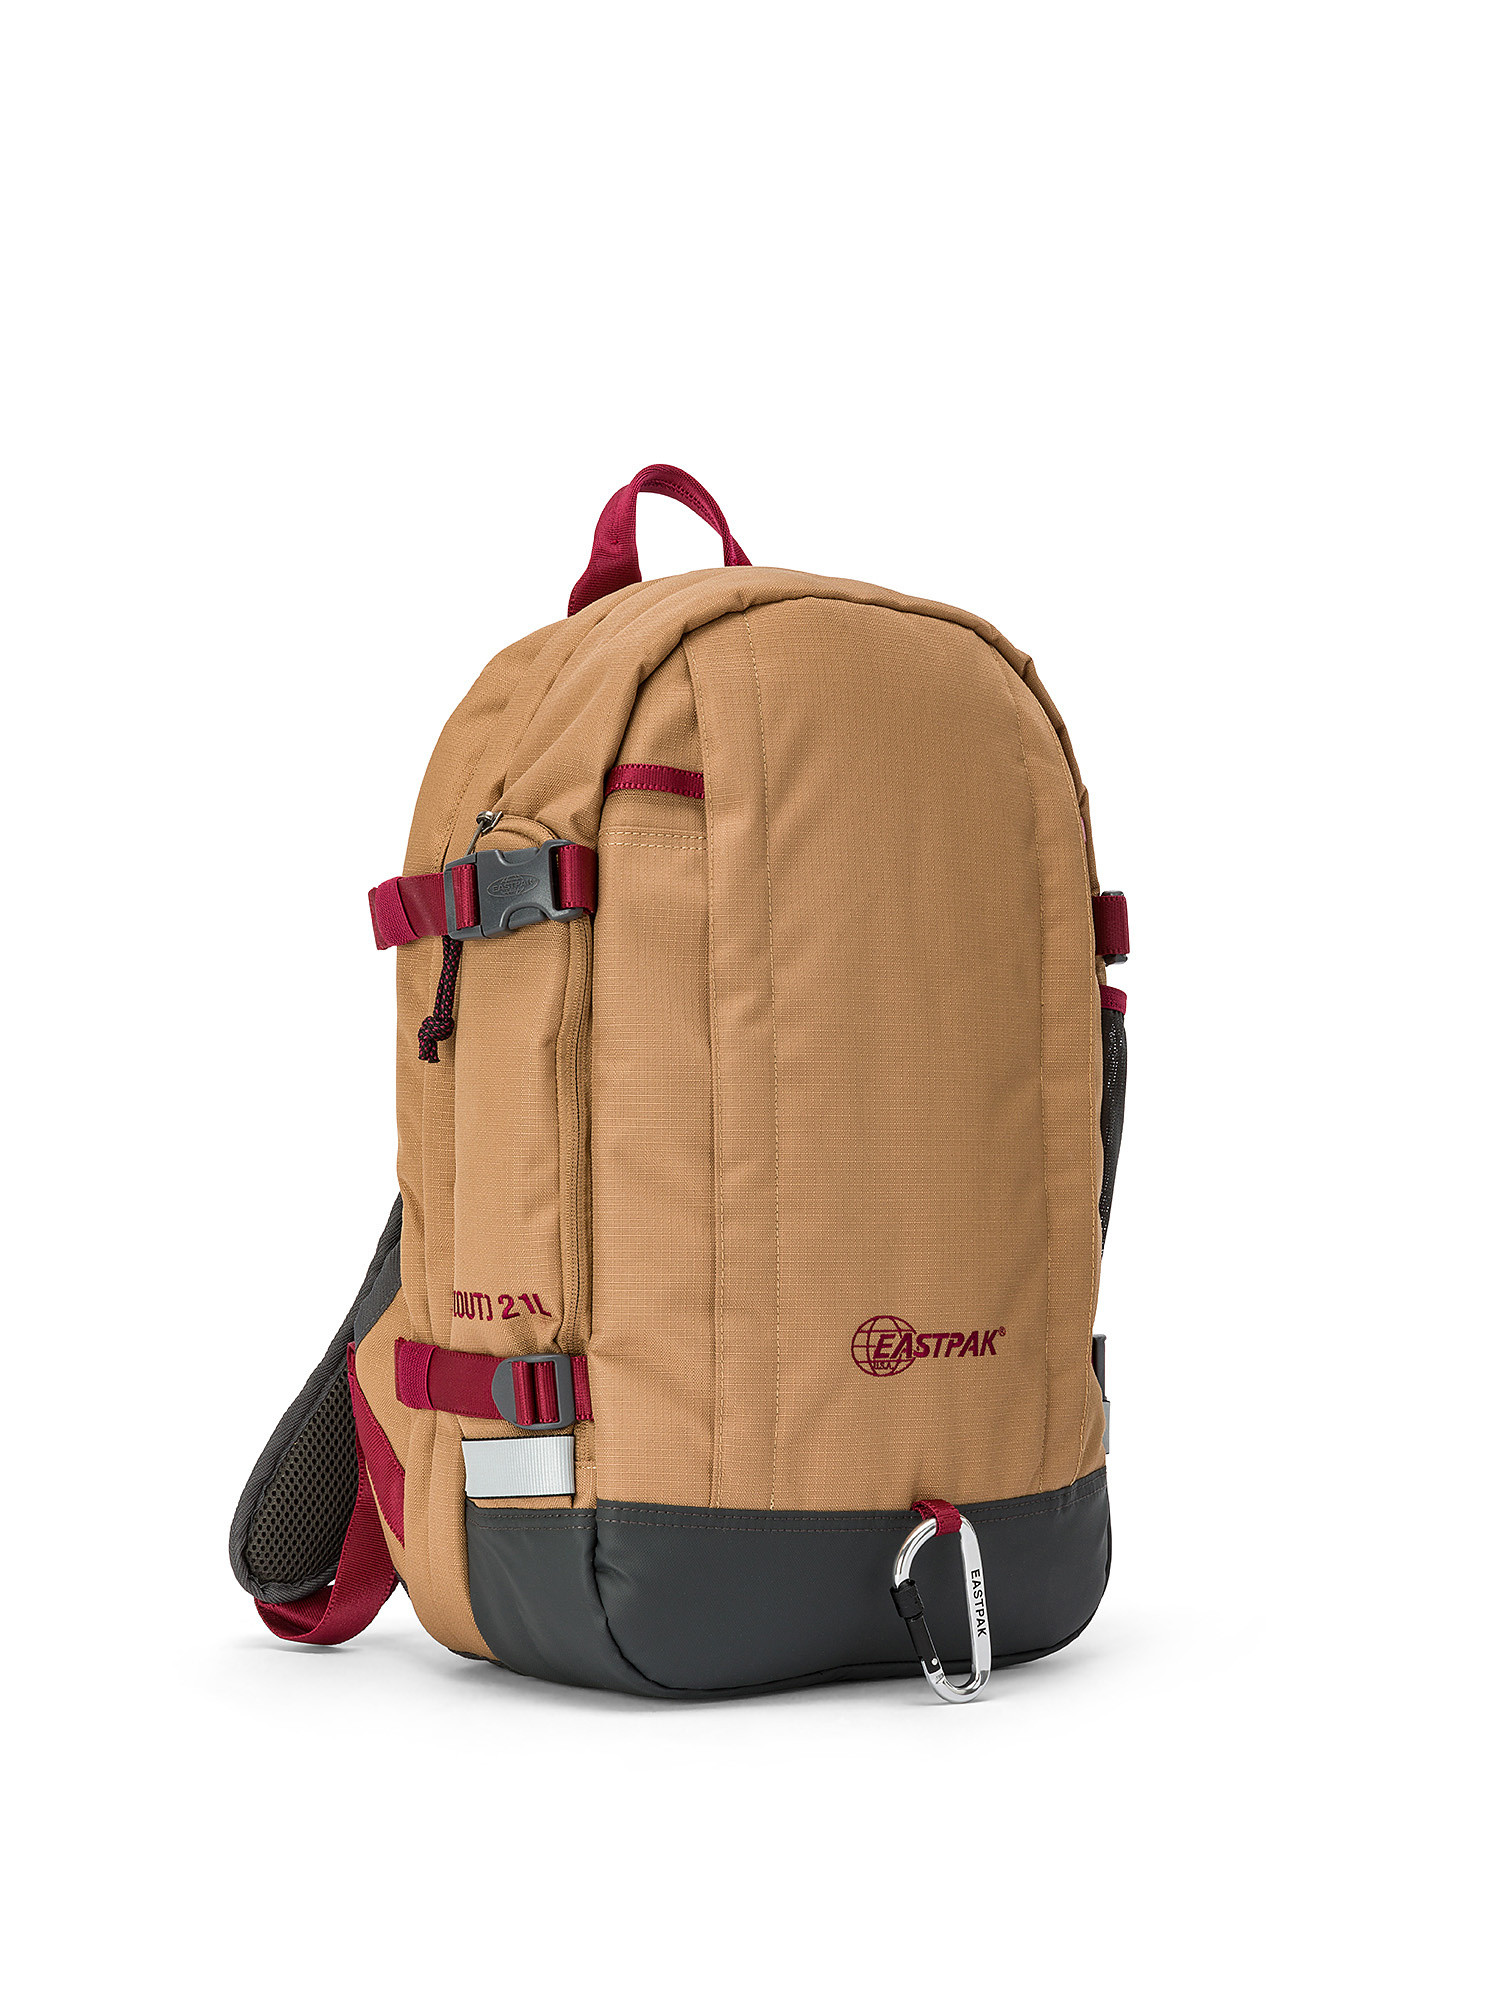 Eastpak - Out Safepack Out Brown backpack, Light Brown, large image number 1